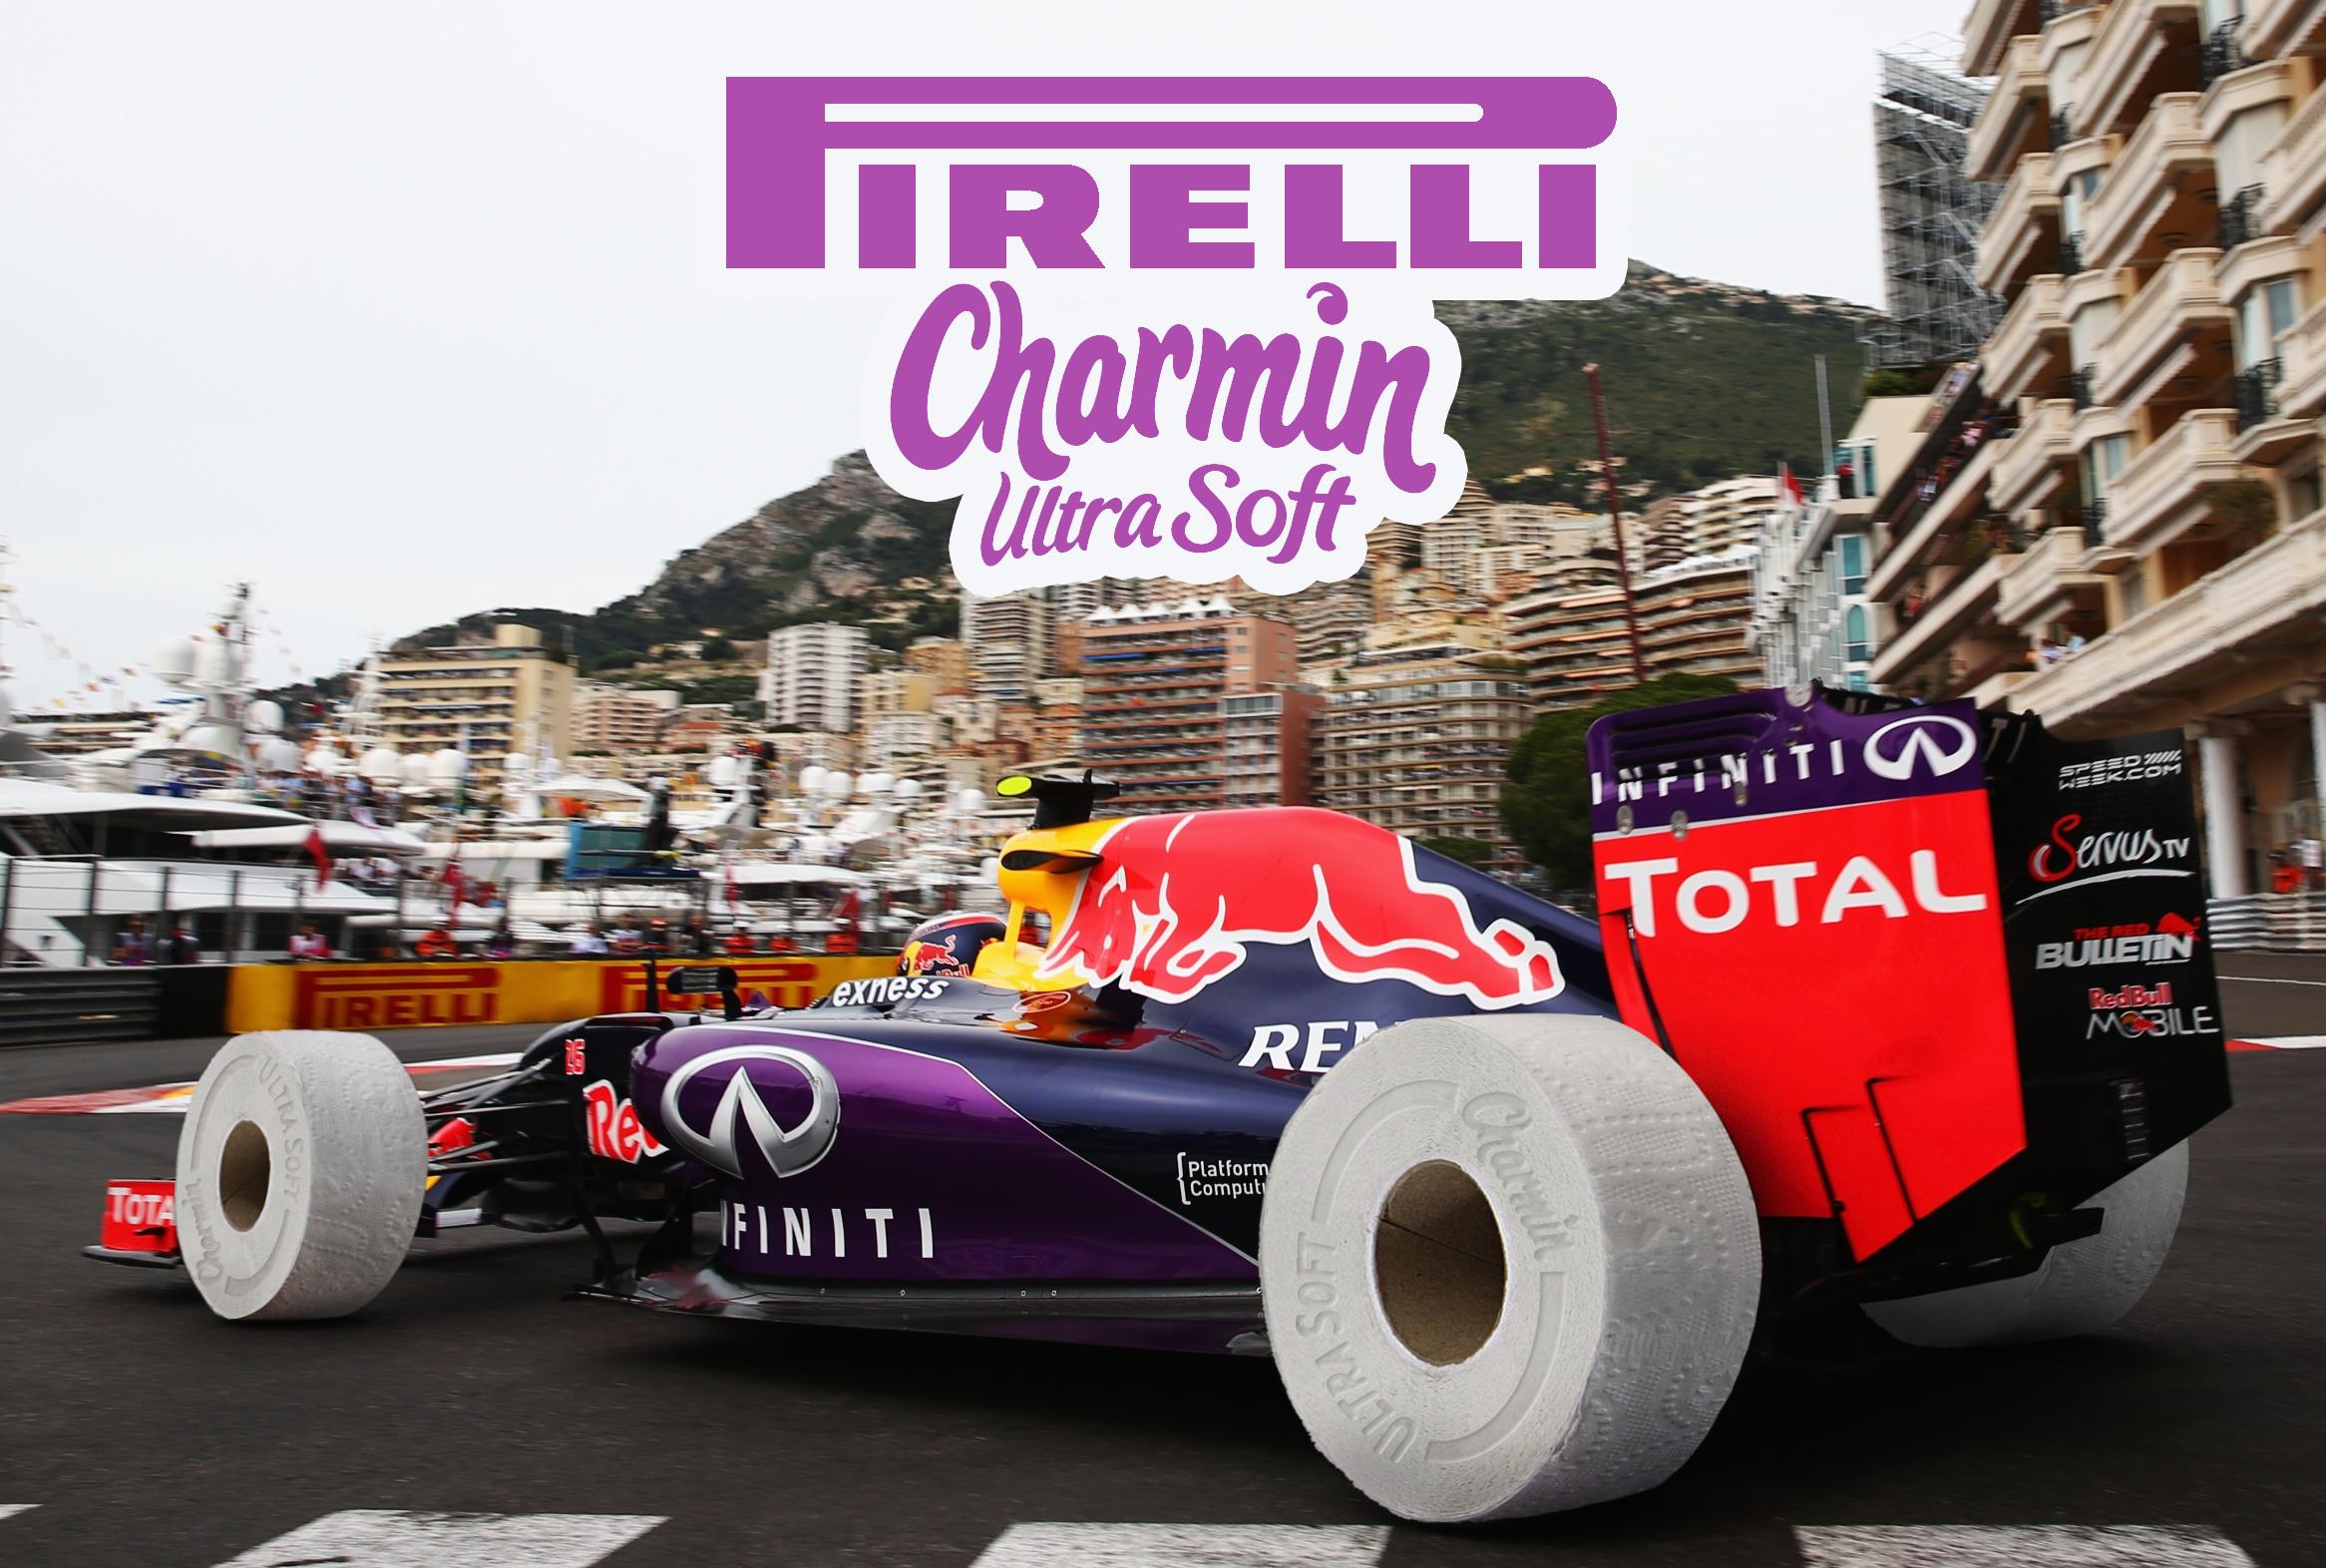 pirelli ultrasoft tyre - Irelli Charmin Ultra Soft Infiniti Total cervesa Bulletin Jernes Mile Re 2 Finiti